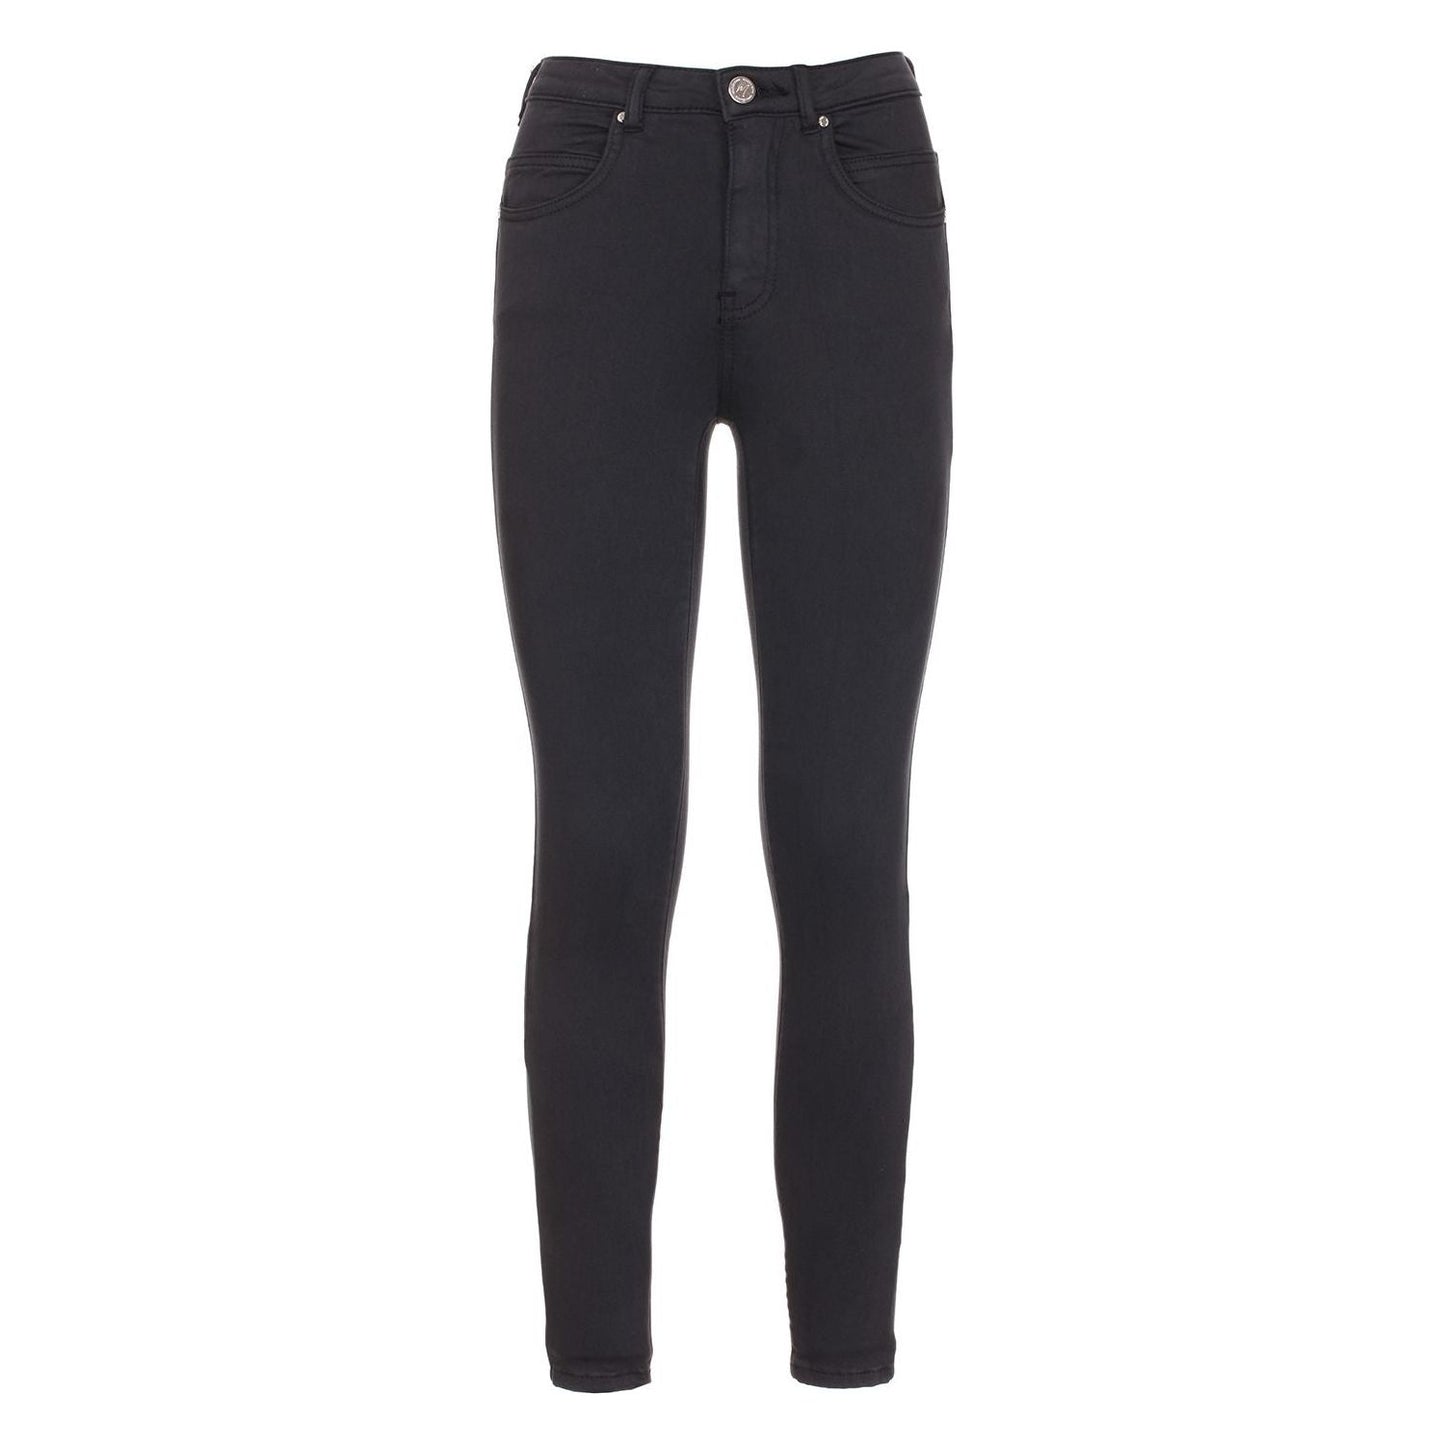 Maison Espin Chic High-Waist Super Skinny Olivia Pants black-cotton-jeans-pant-1 Jeans & Pants stock_product_image_1648_833293719-da55f217-32e.jpg